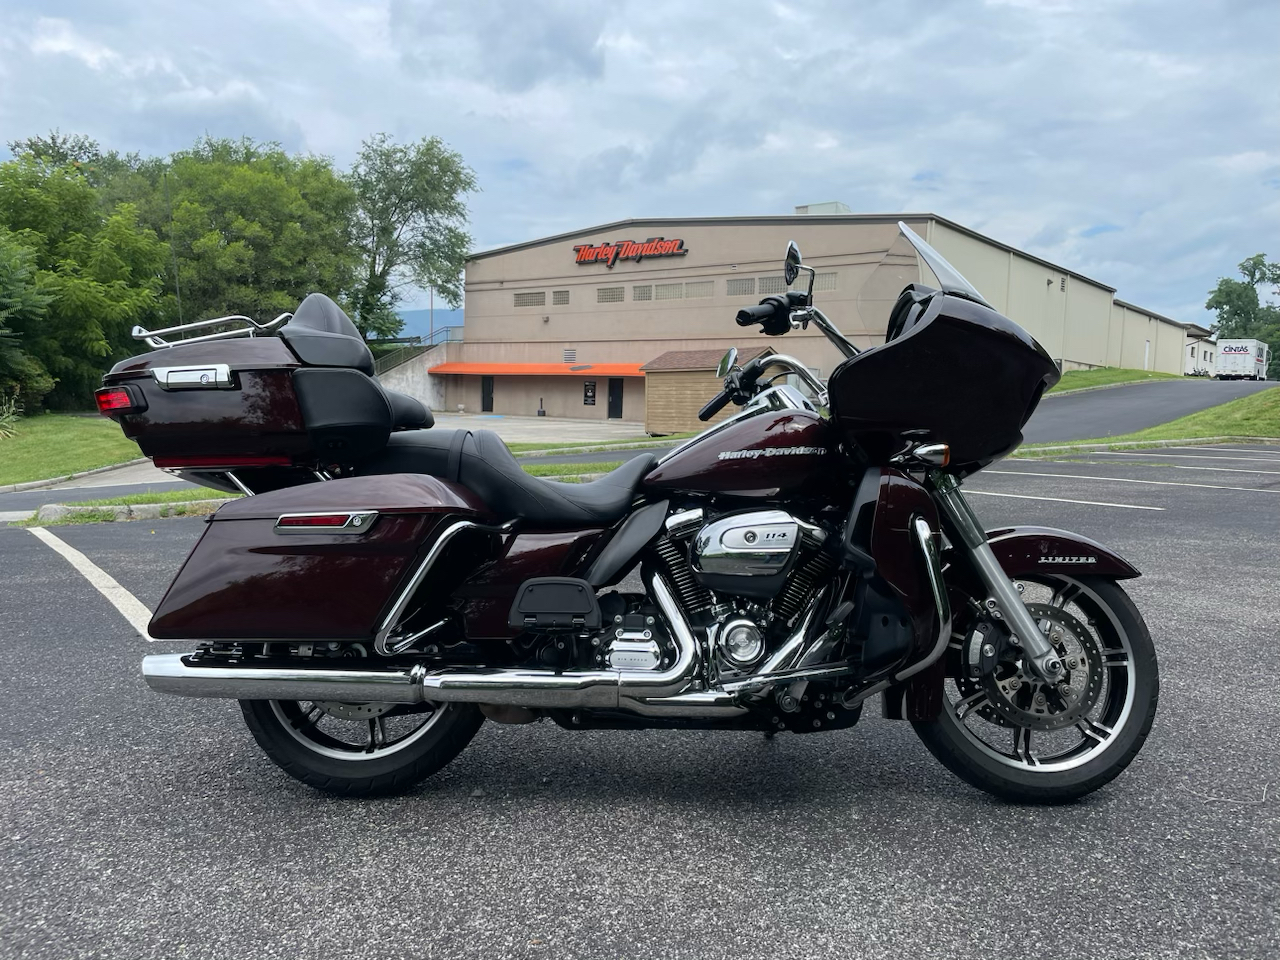 2021 Harley-Davidson Road Glide Limited in Roanoke, Virginia - Photo 1